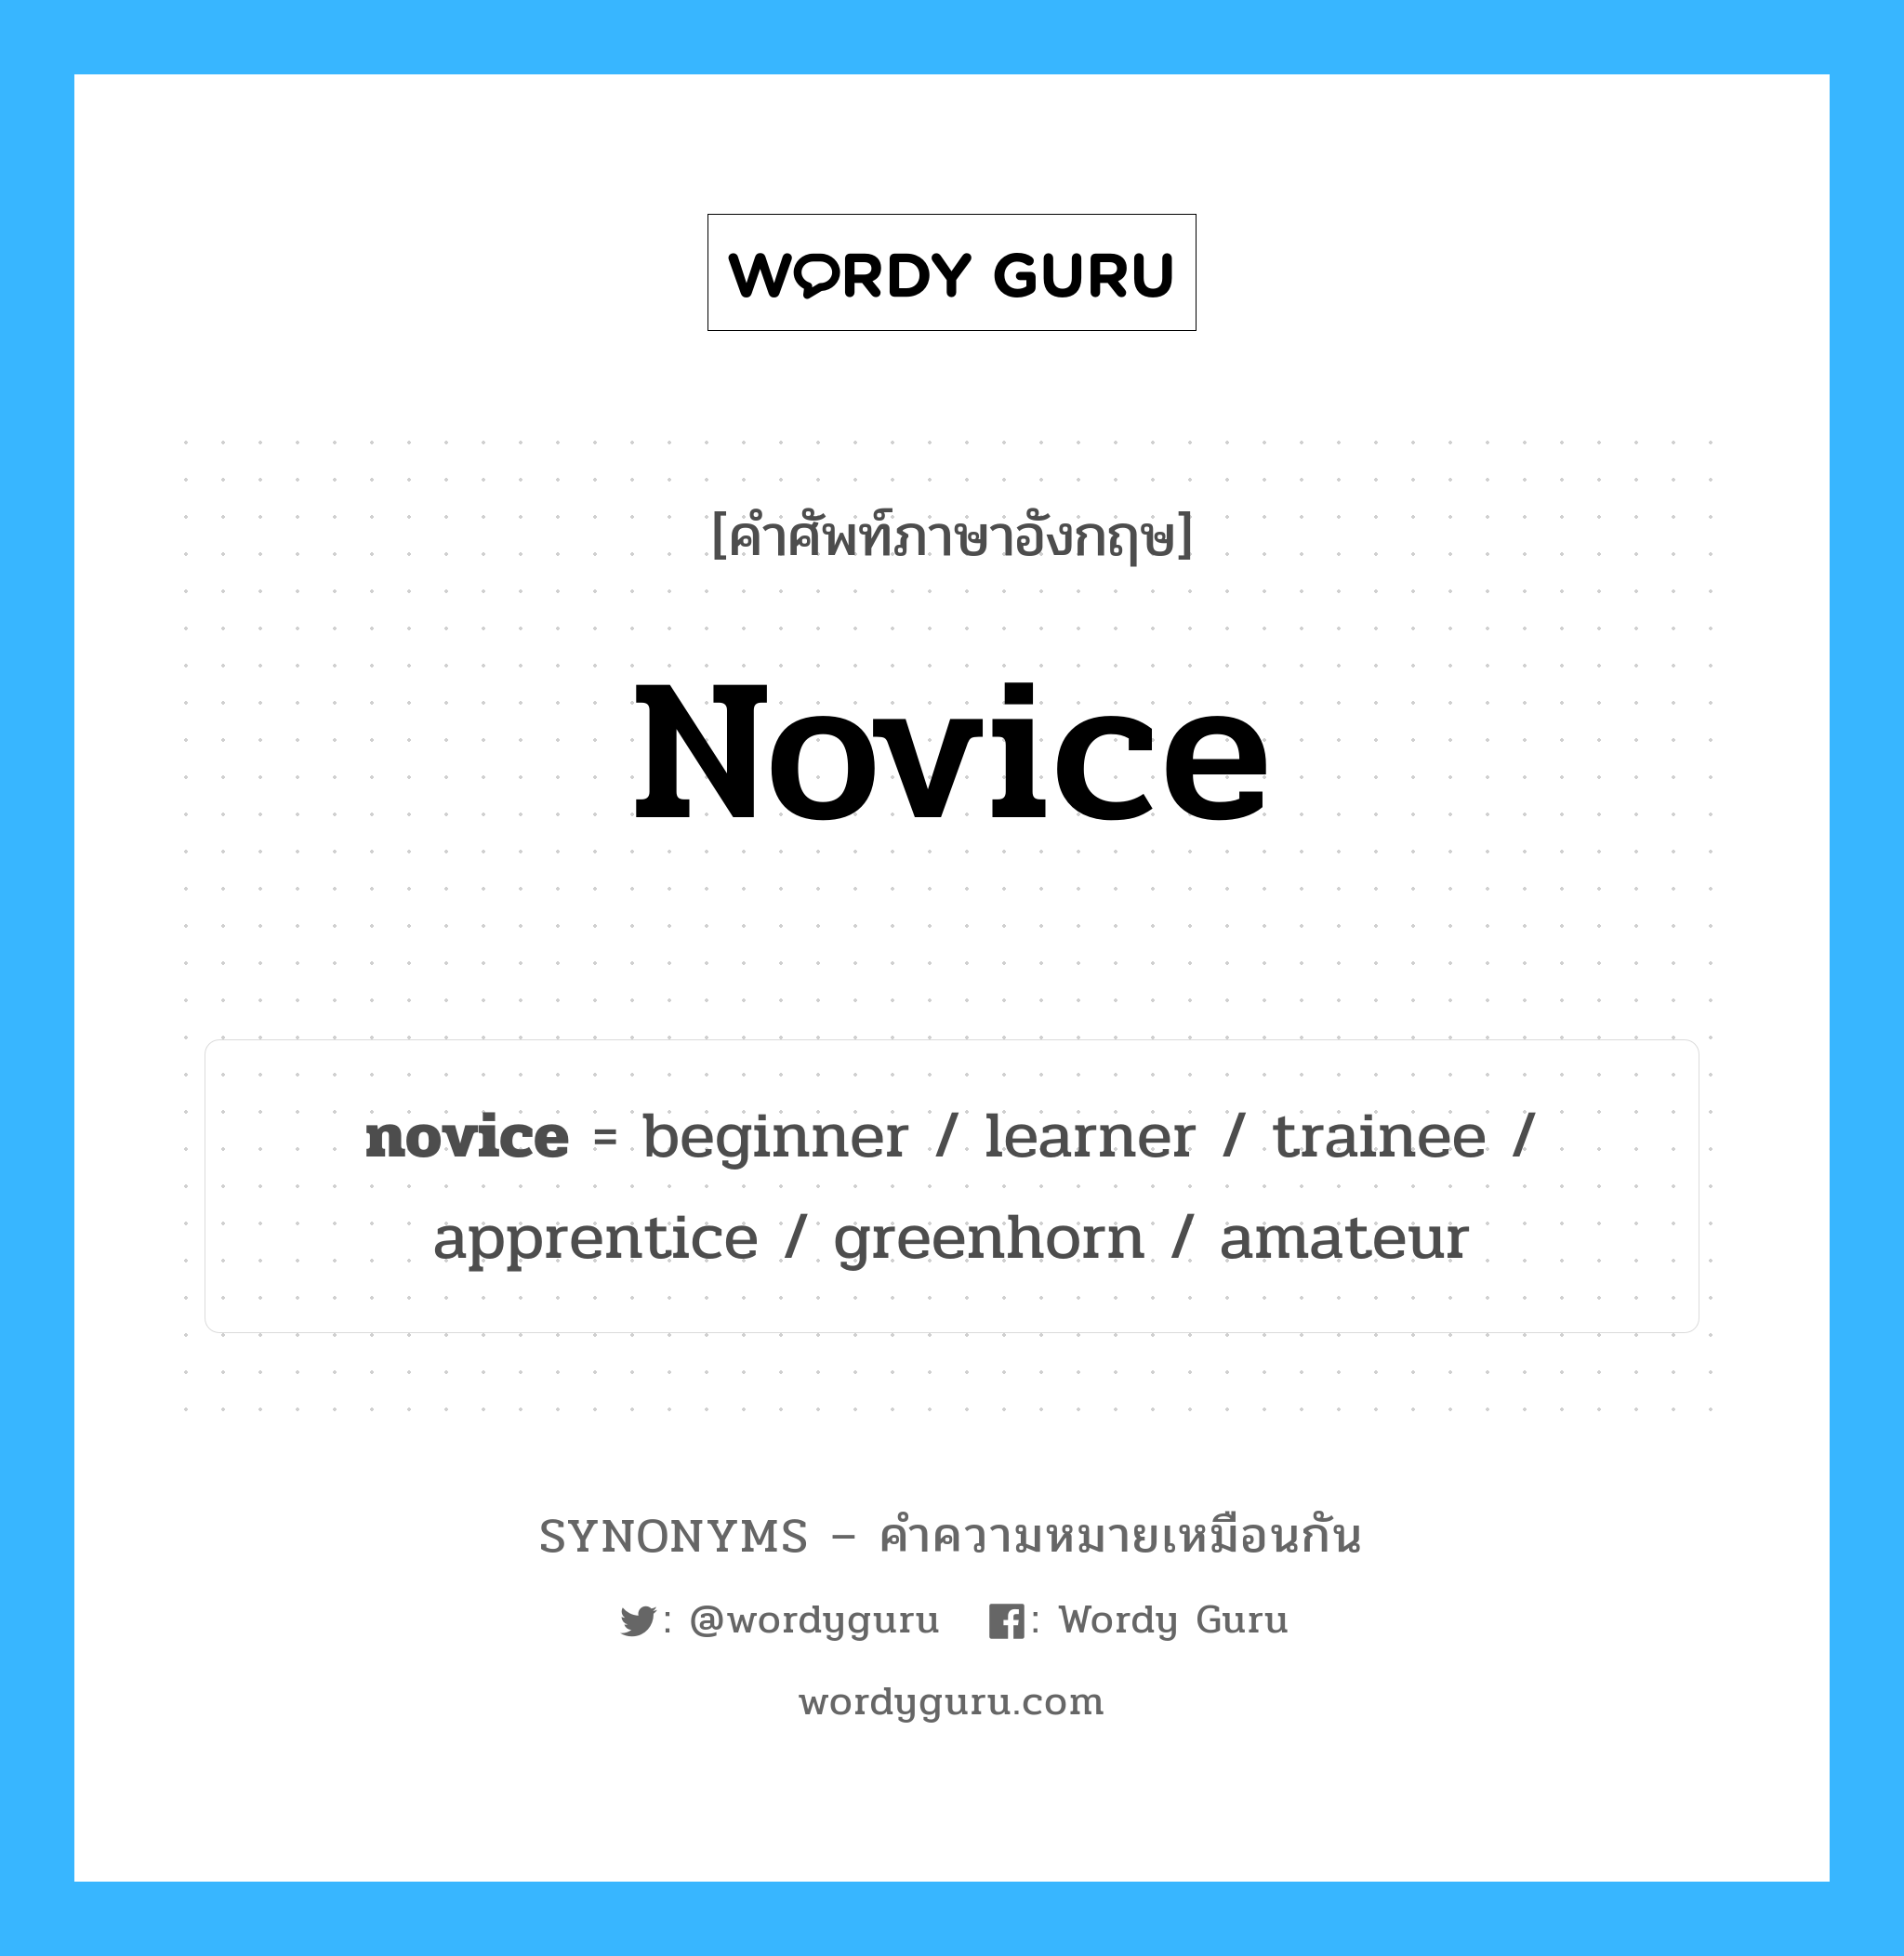 learner เป็นหนึ่งใน novice และมีคำอื่น ๆ อีกดังนี้, คำศัพท์ภาษาอังกฤษ learner ความหมายคล้ายกันกับ novice แปลว่า ผู้เรียน หมวด novice